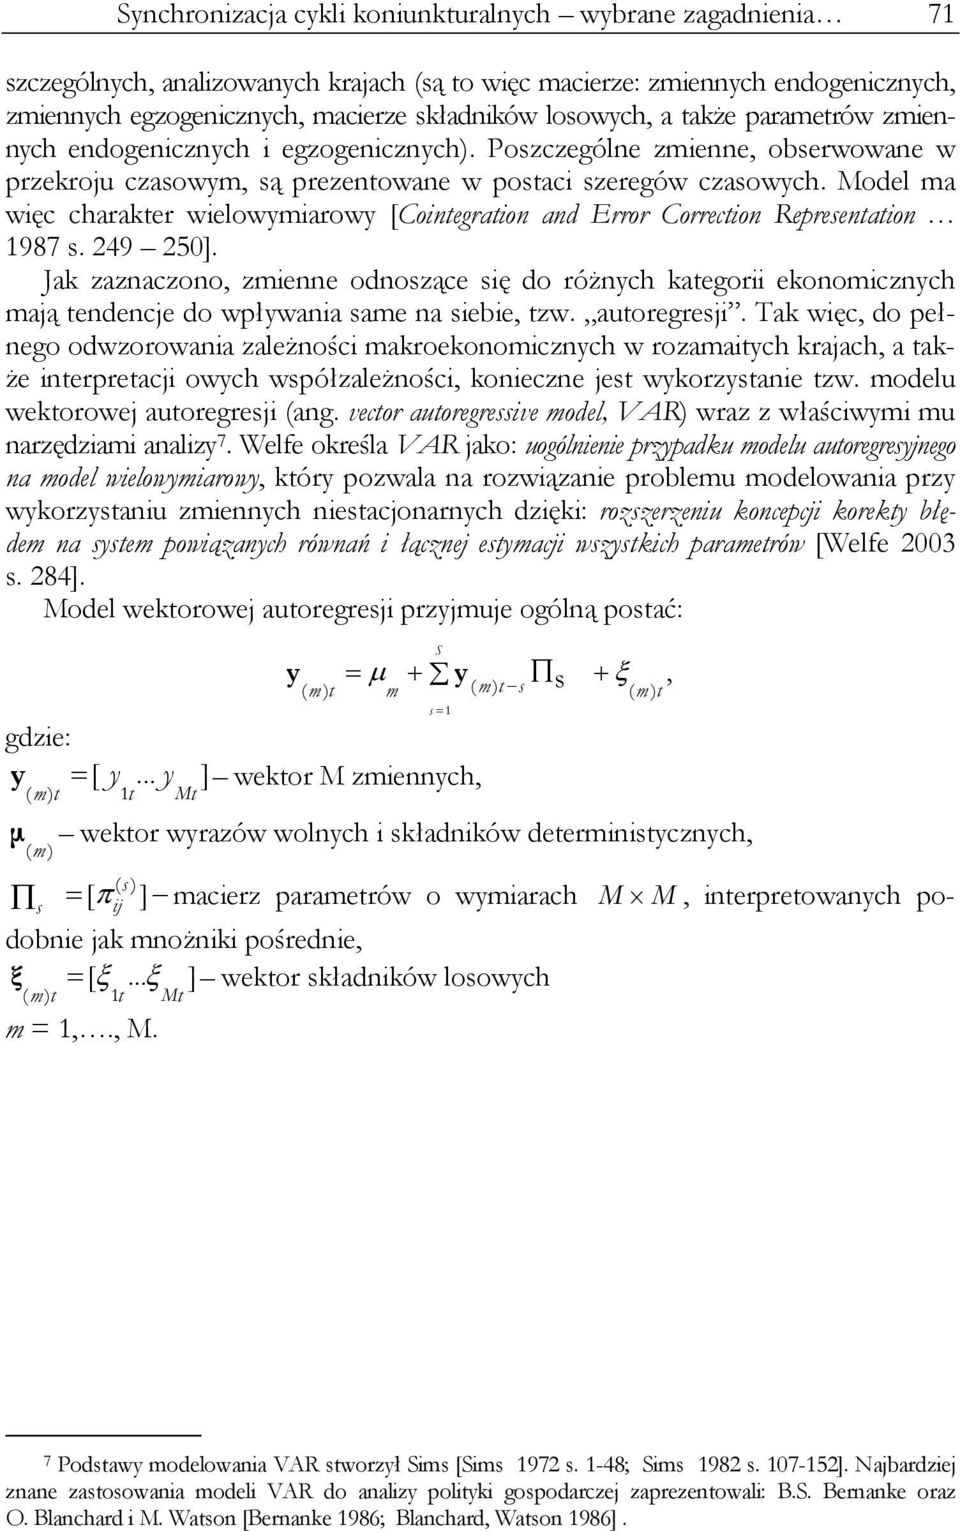 Model ma więc charaker wielowymiarowy [Coinegraion and Error Correcion Repreenaion 1987. 49 50].